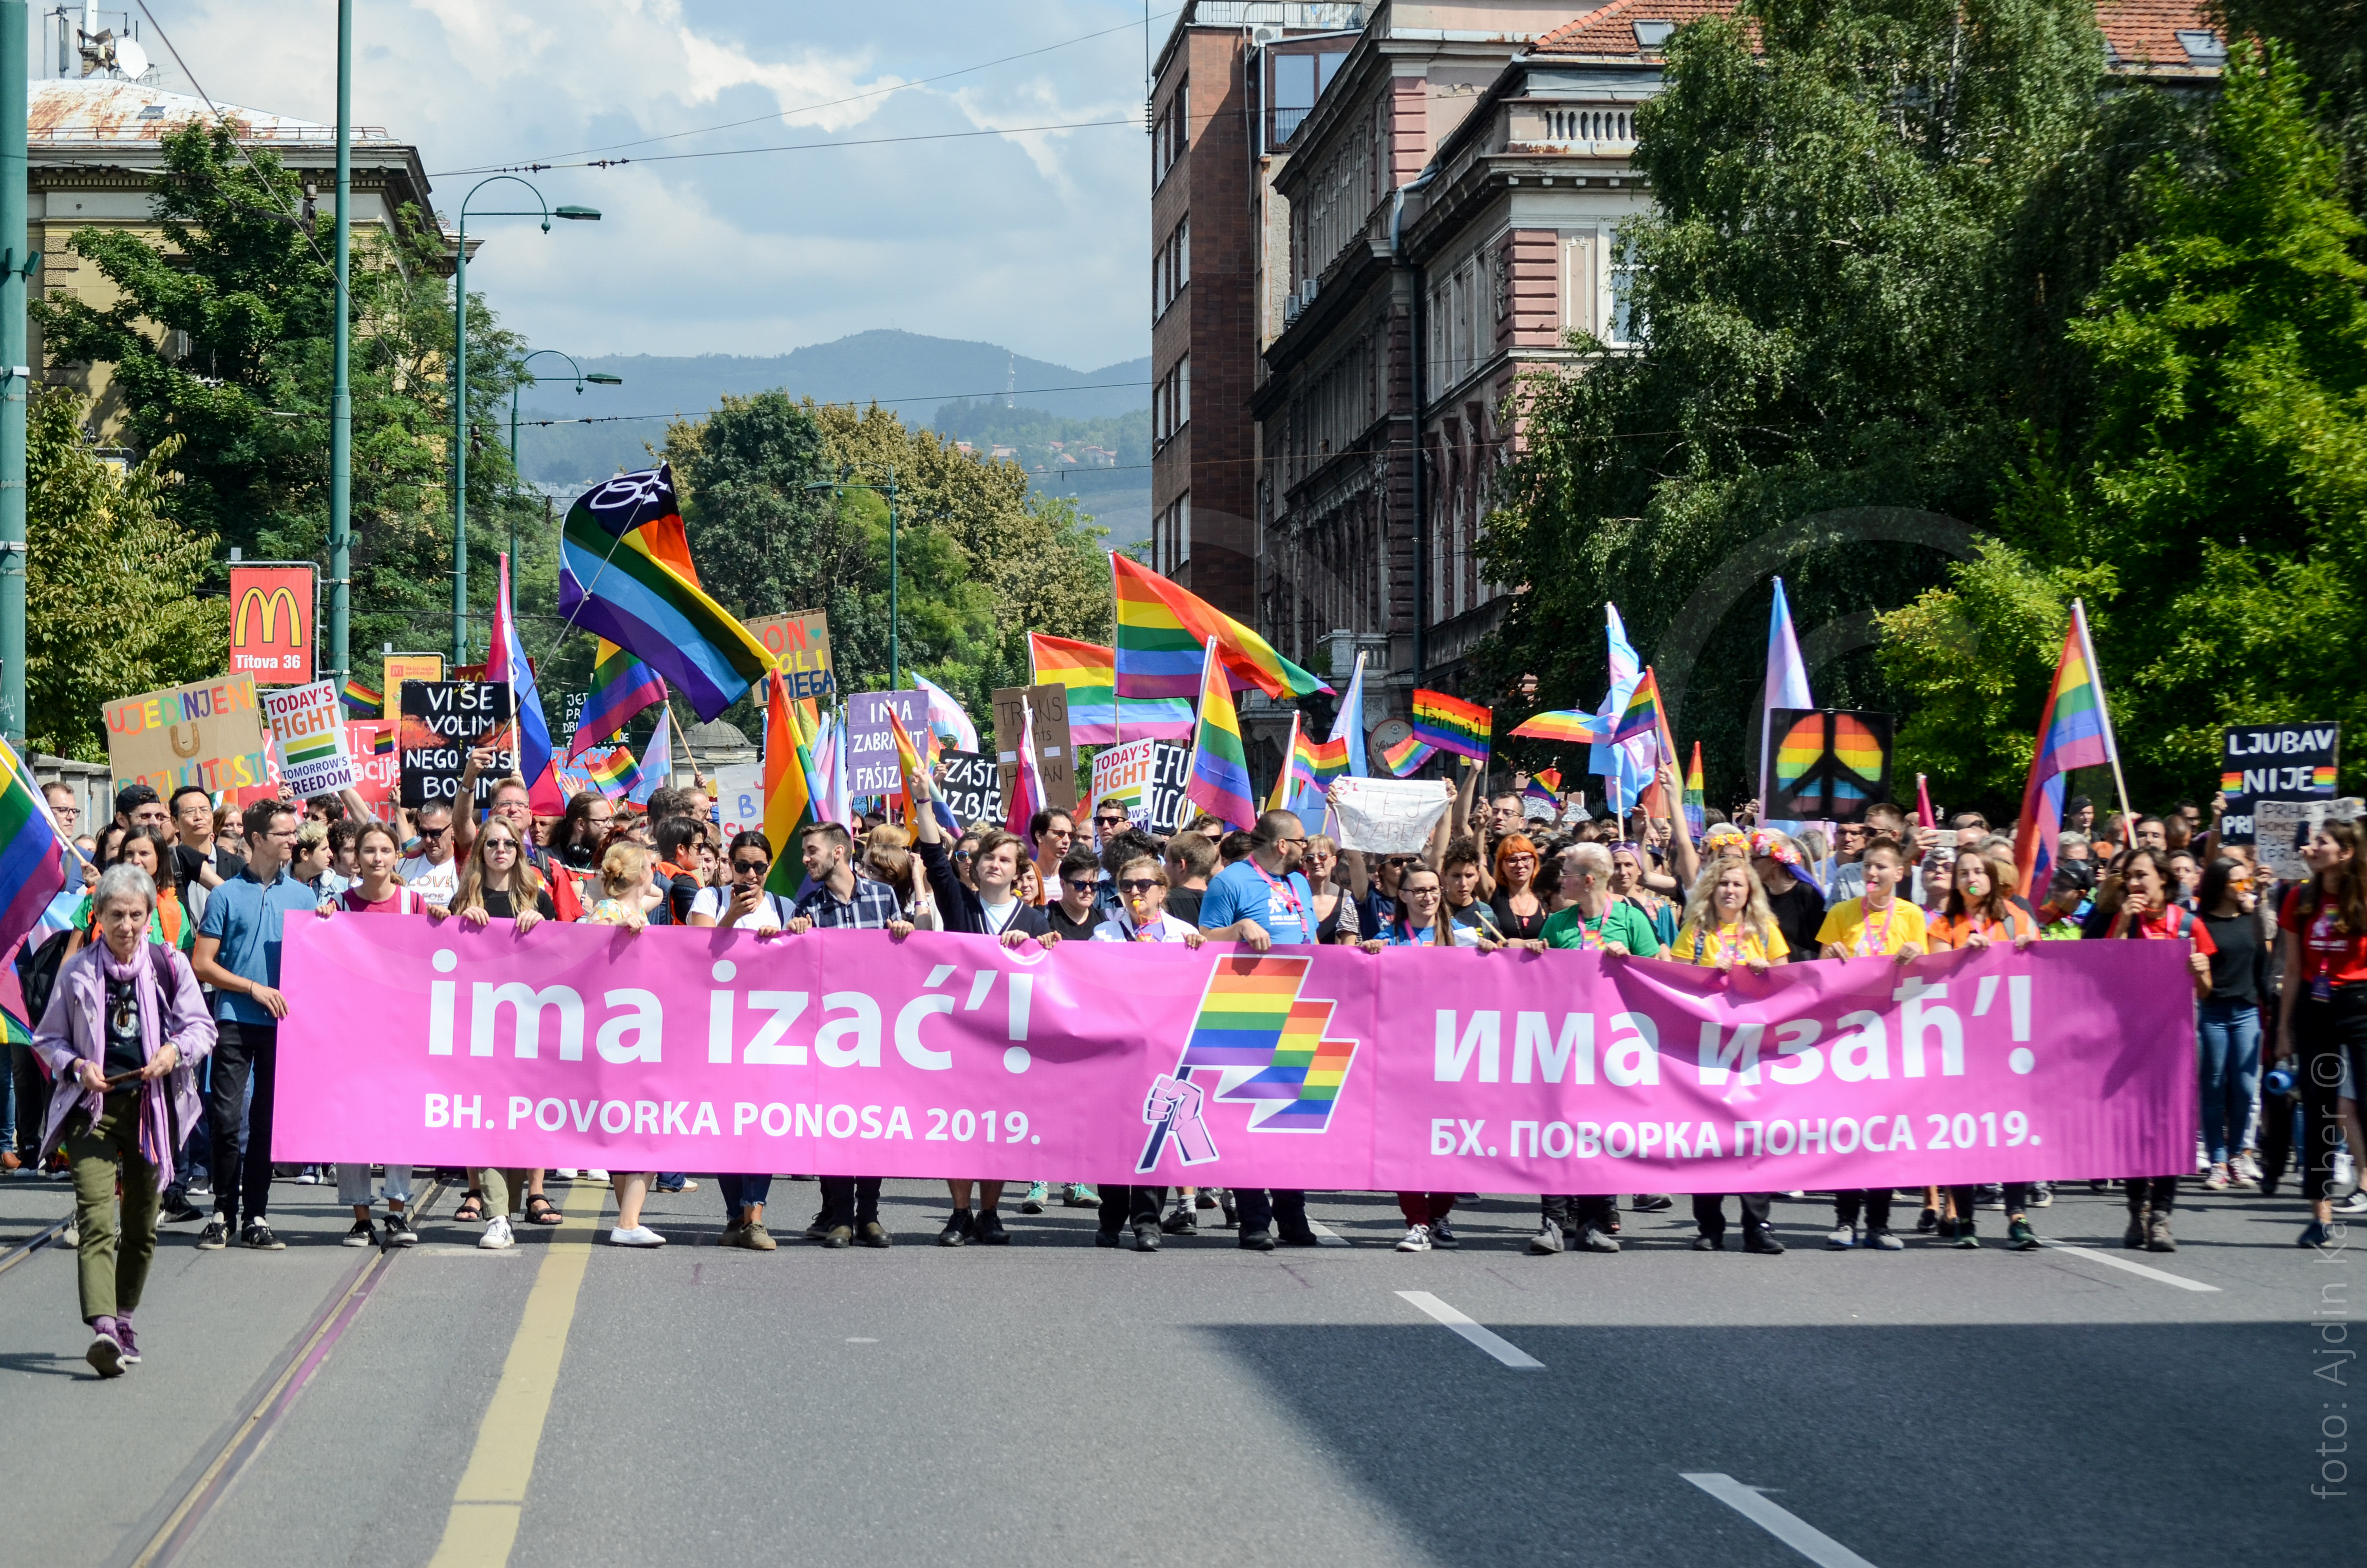 Povorka ponosa, Sarajevo, LGBTQI pride parade 2019